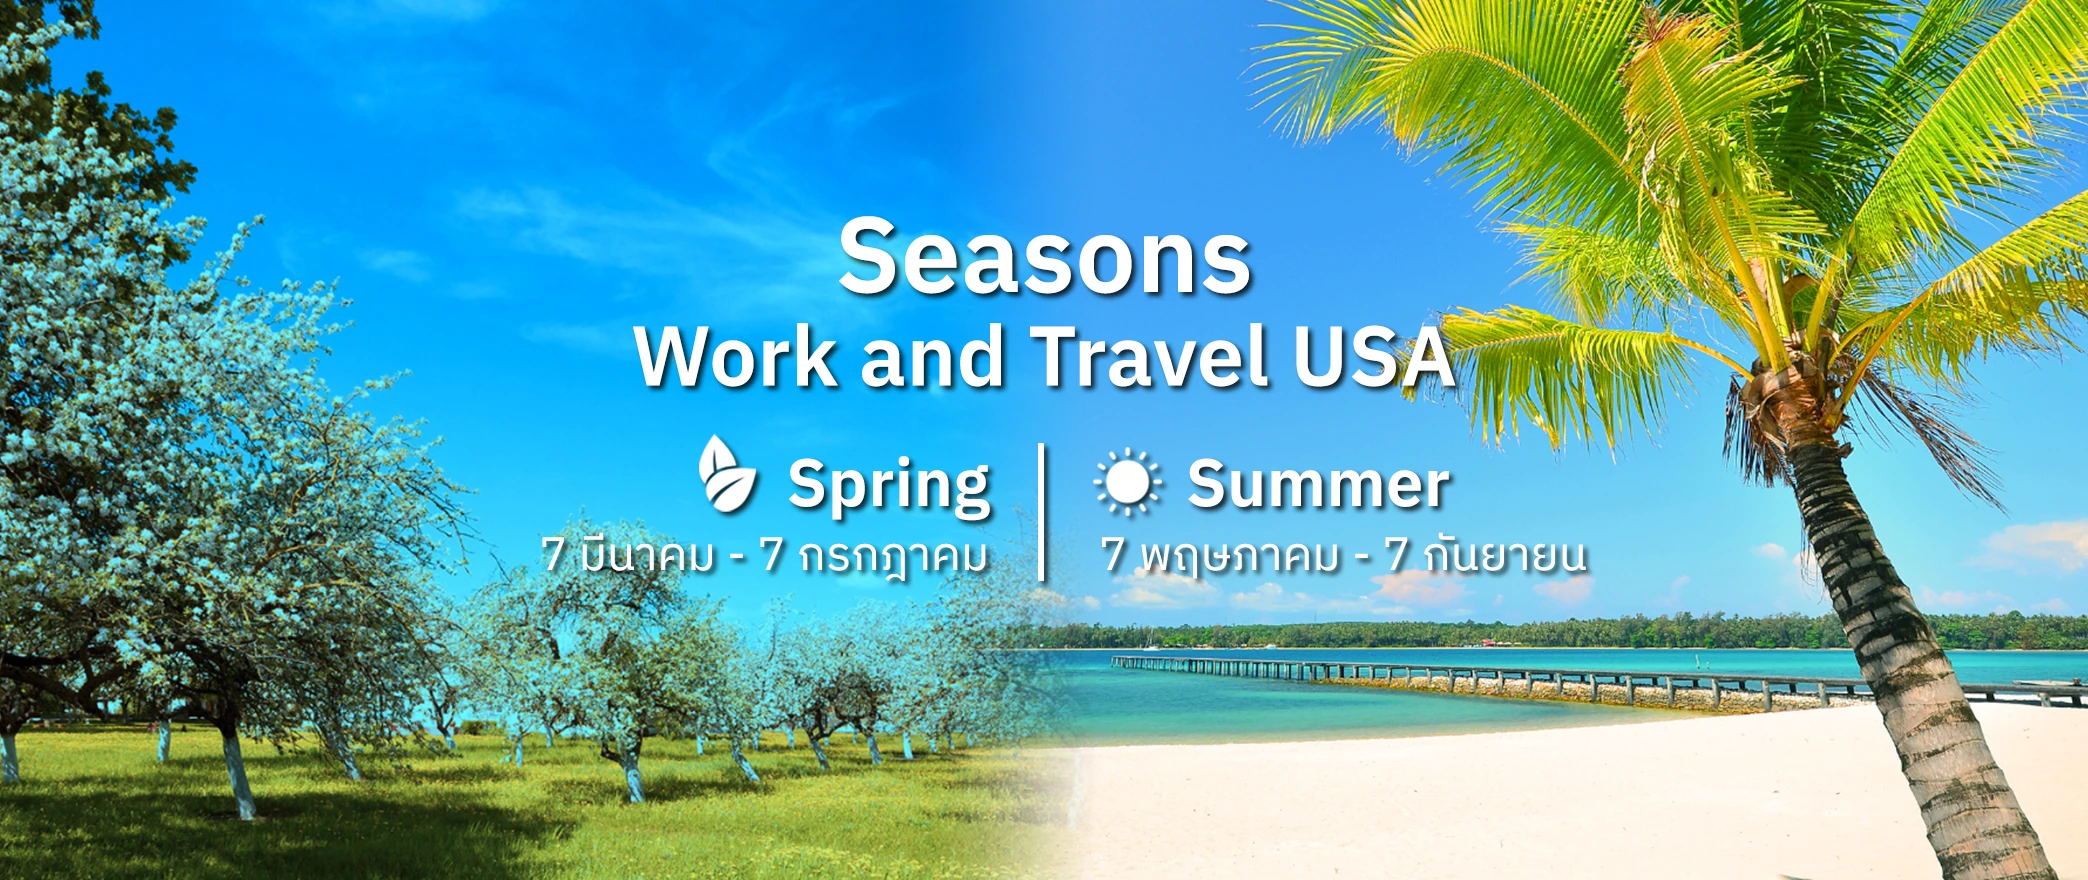 newstep new step season ช่วง spring summer work and travel อเมริกา ปิดเทอม มีนาคม เมษายน พฤษภาคม มิถุนายน ฝึกงานต่างประเทศ